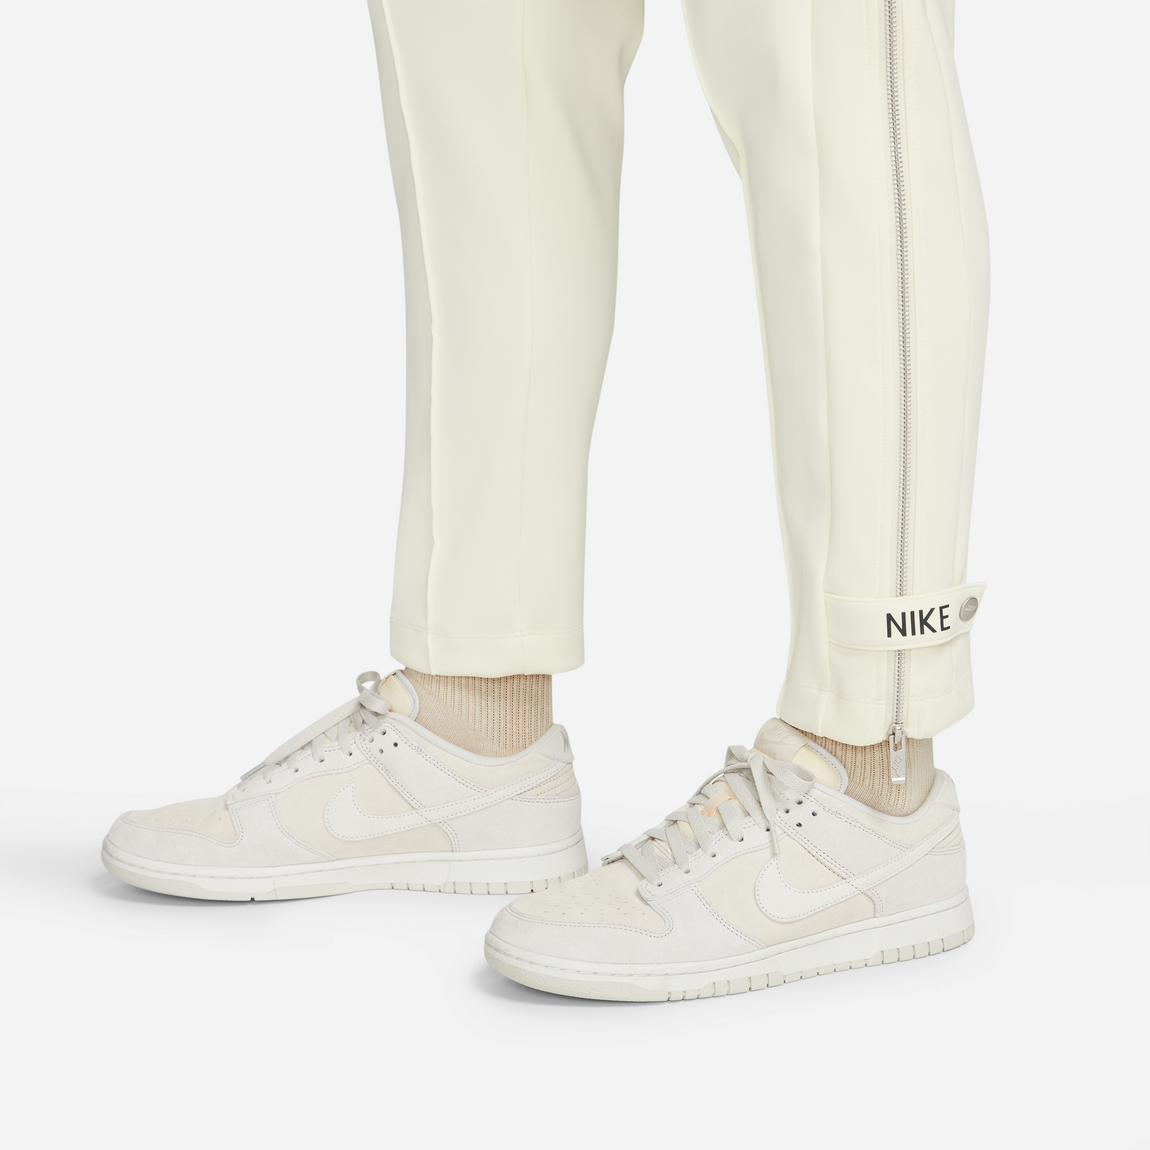 Nike Sportswear Circa Pants (Coconut Milk/Off Noir) - Nike Sportswear Circa Pants (Coconut Milk/Off Noir) - 